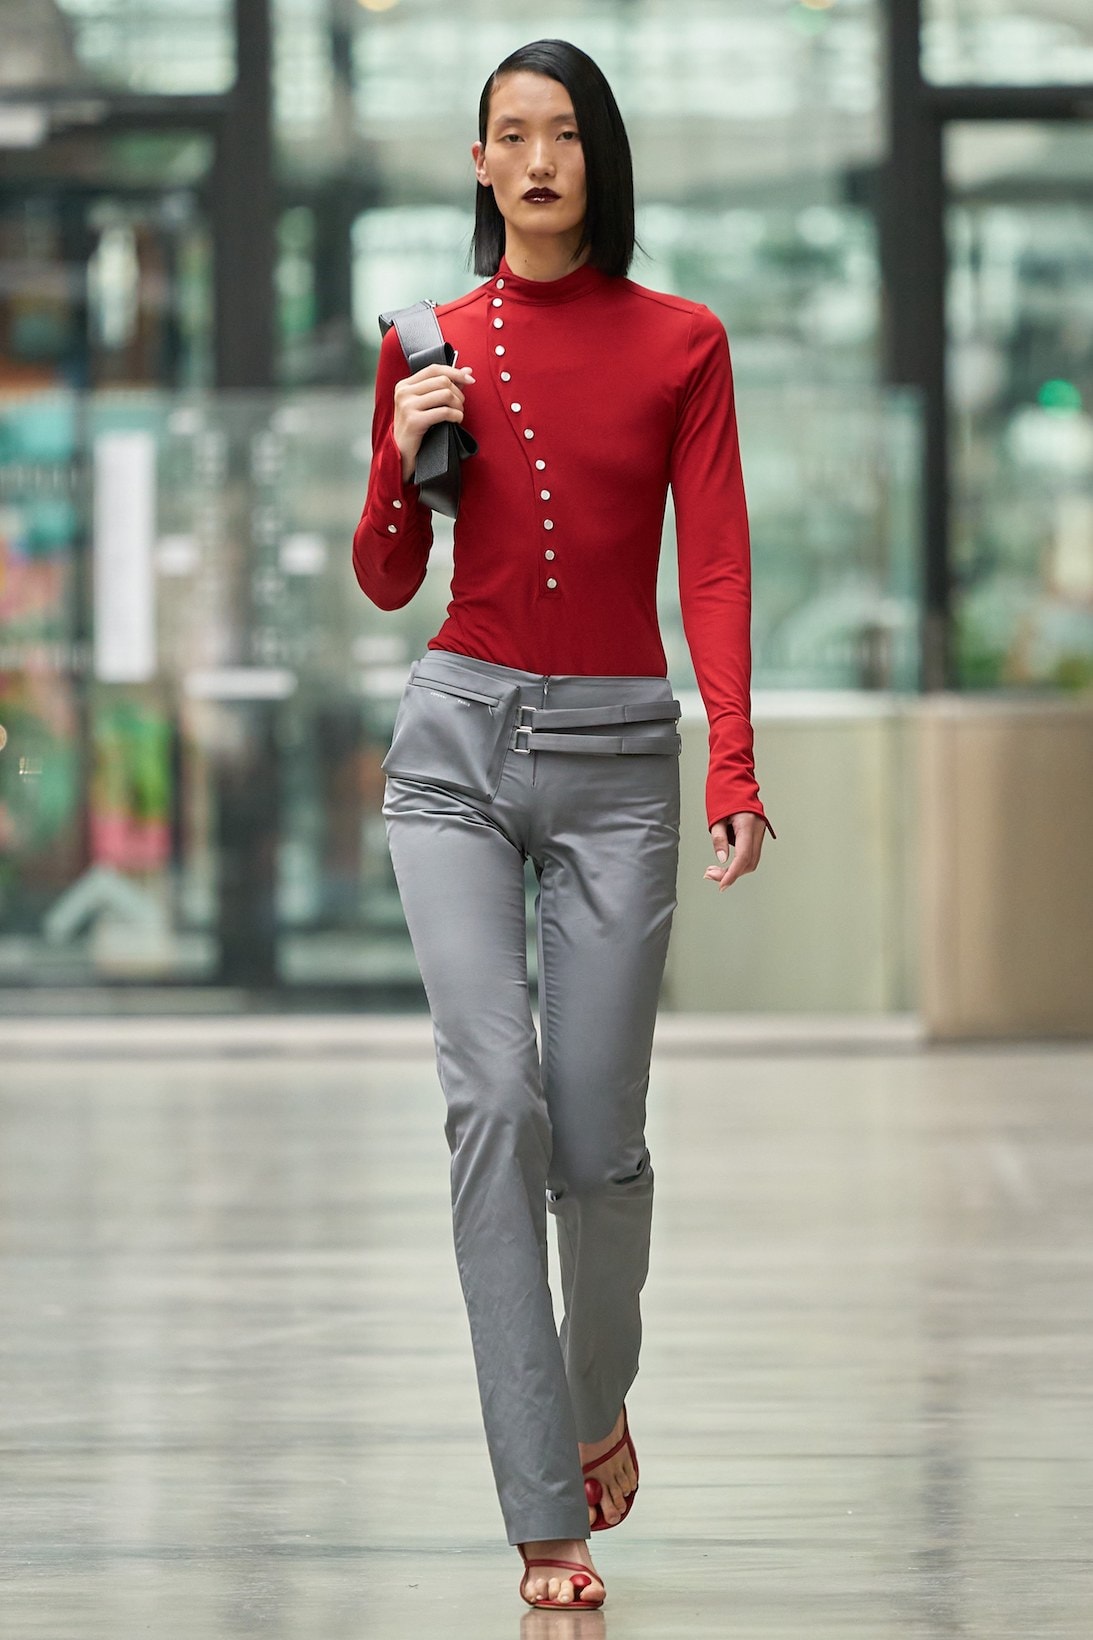 coperni sebastien meyer arnaud vaillant paris fashion week fall winter collection red long sleeve top grey silver pants